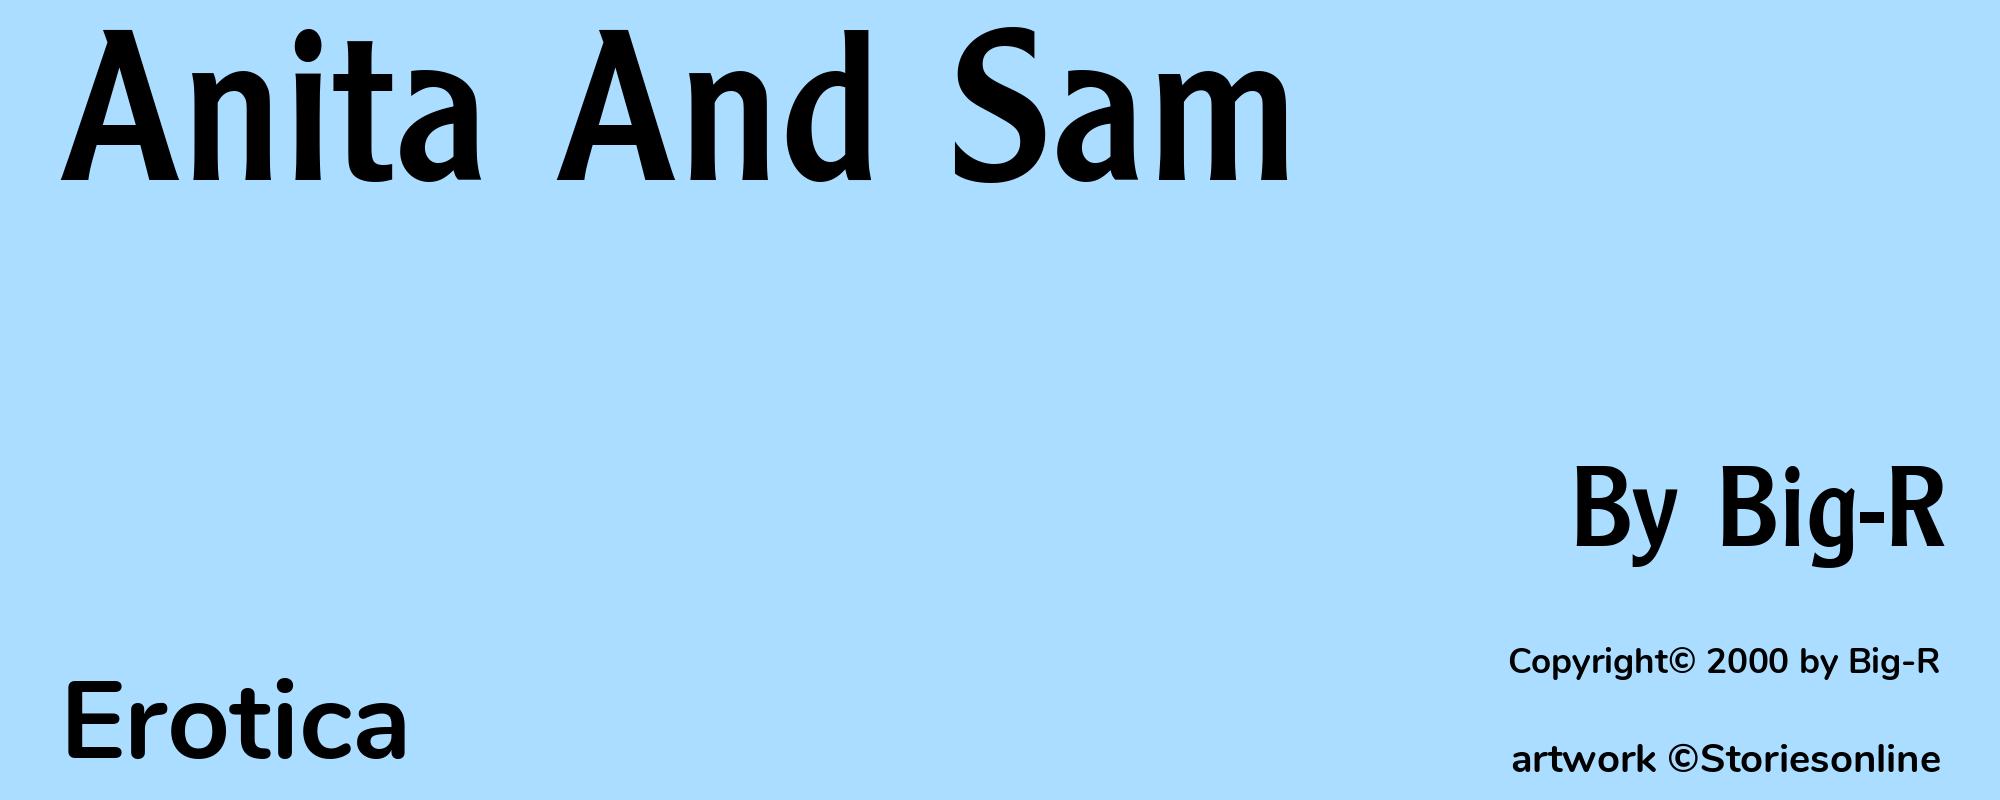 Anita And Sam - Cover